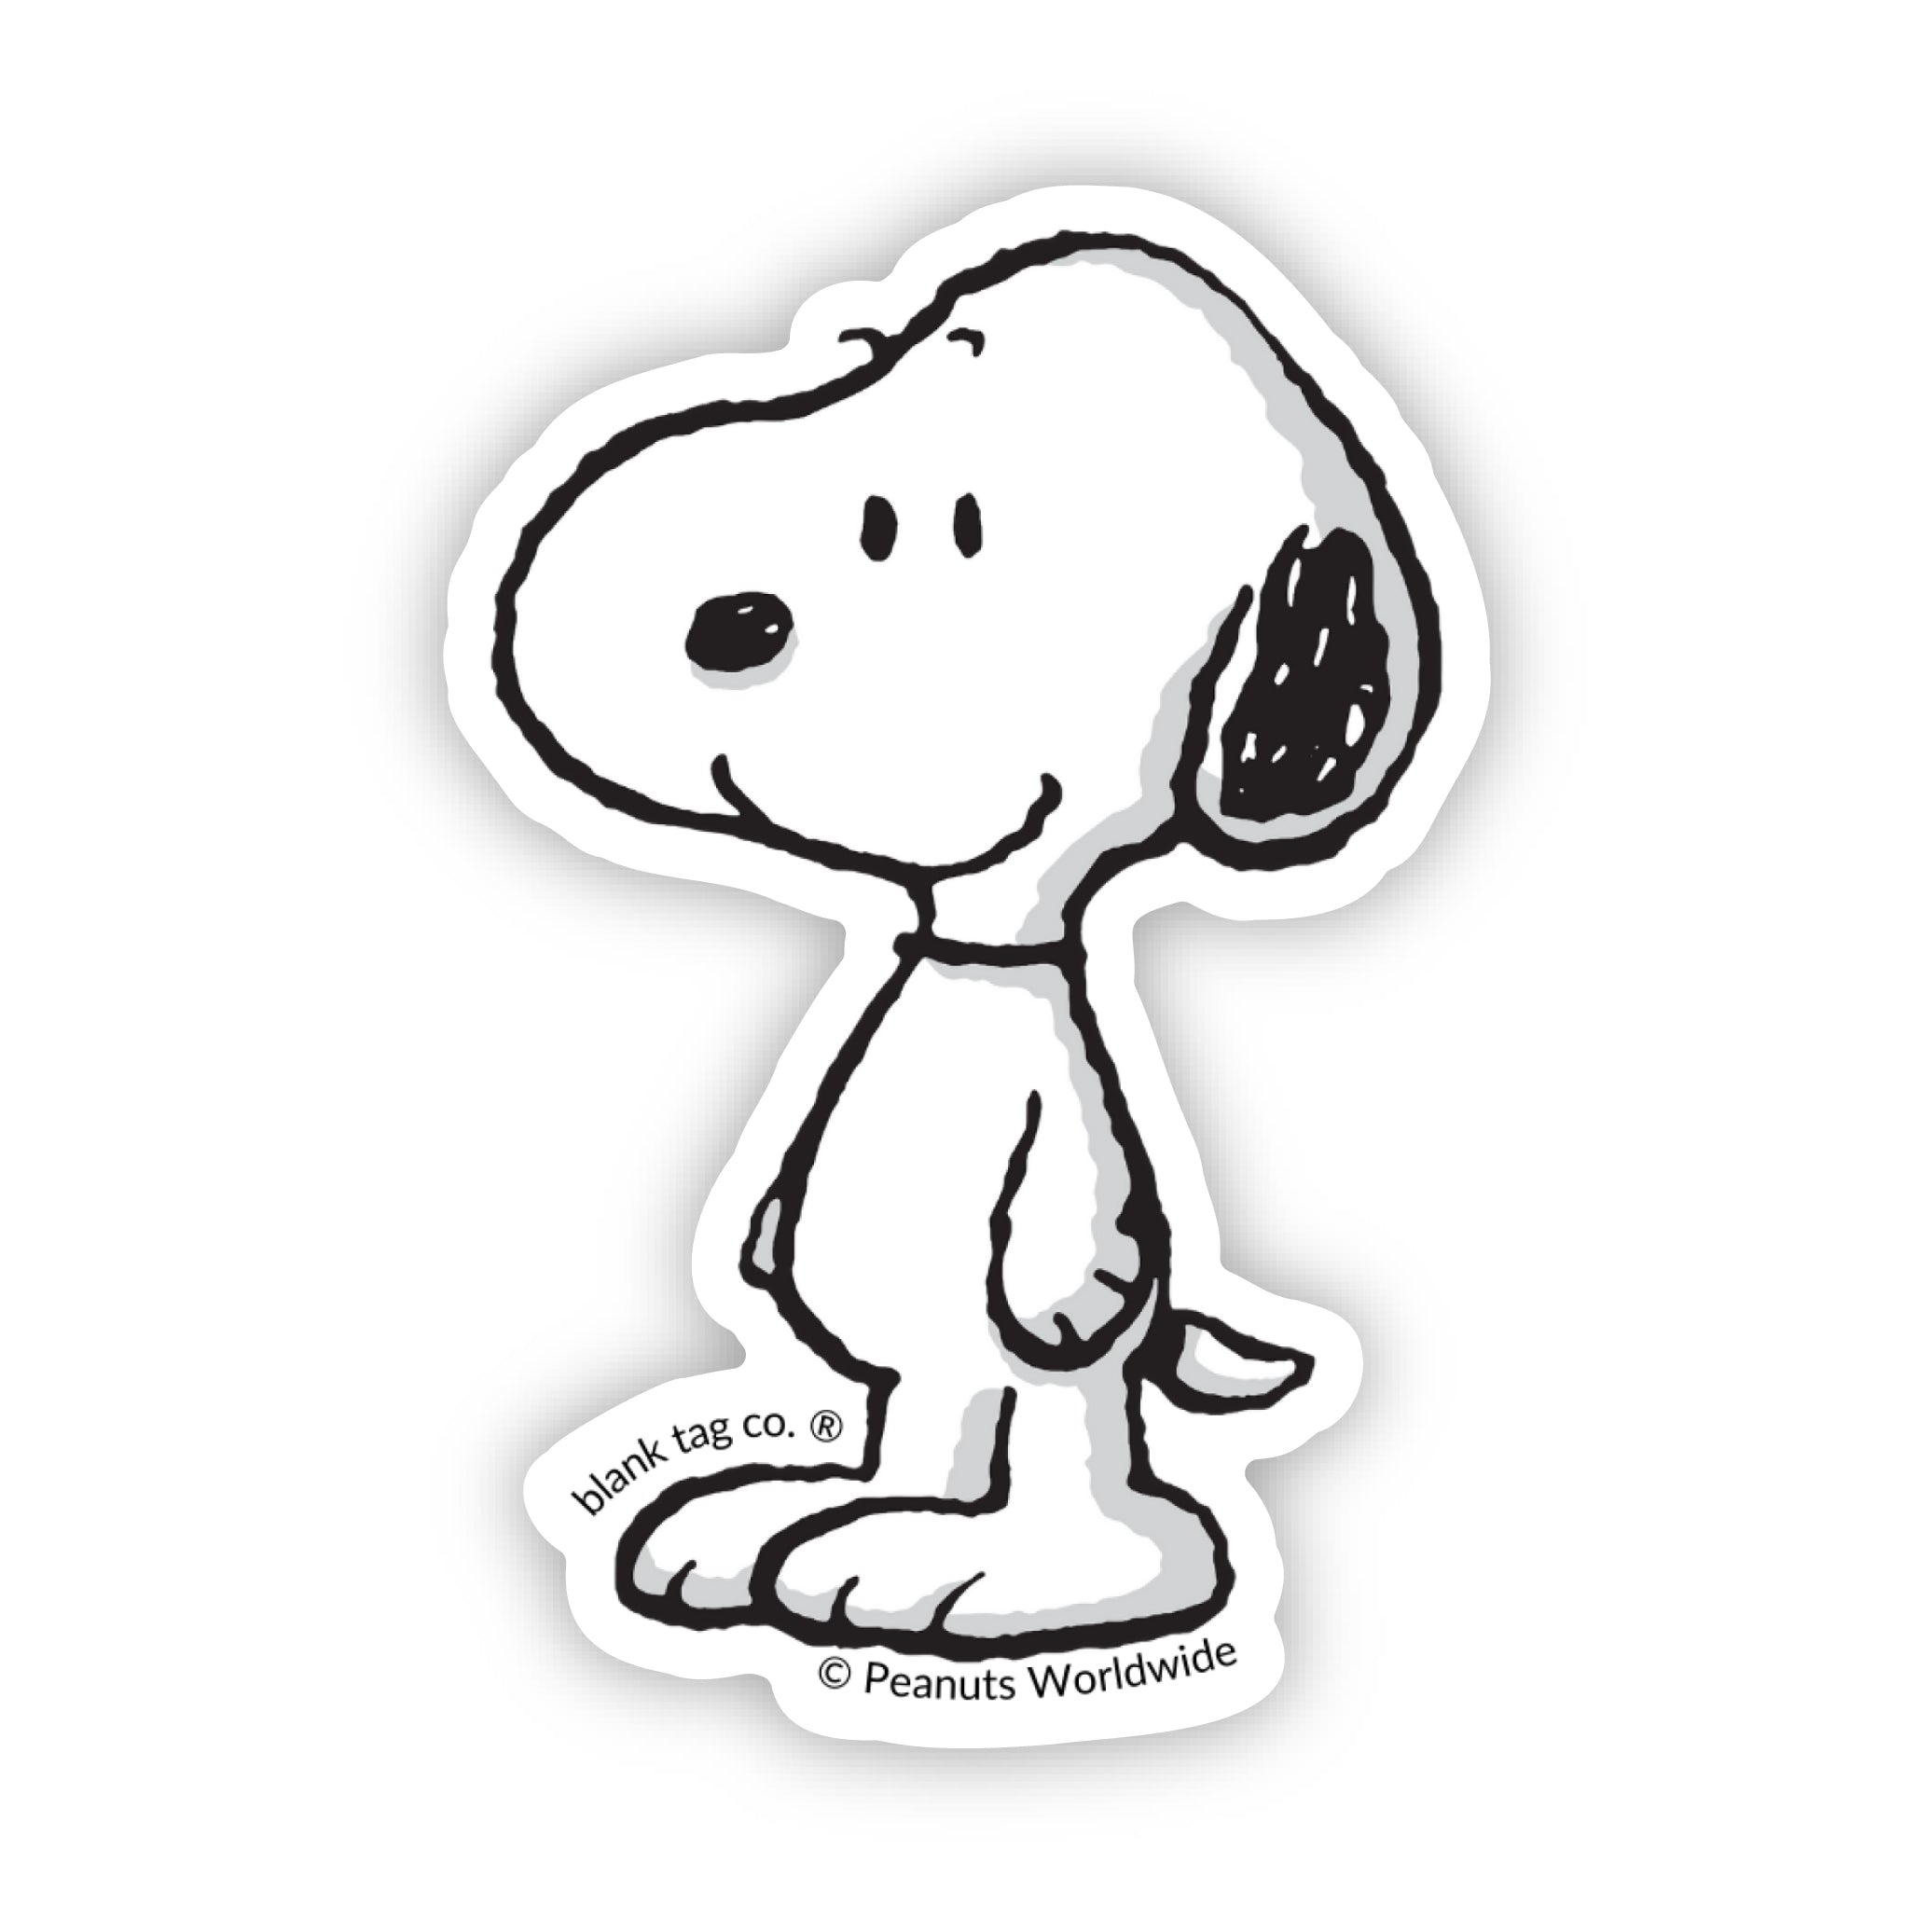 The Snoopy Sticker